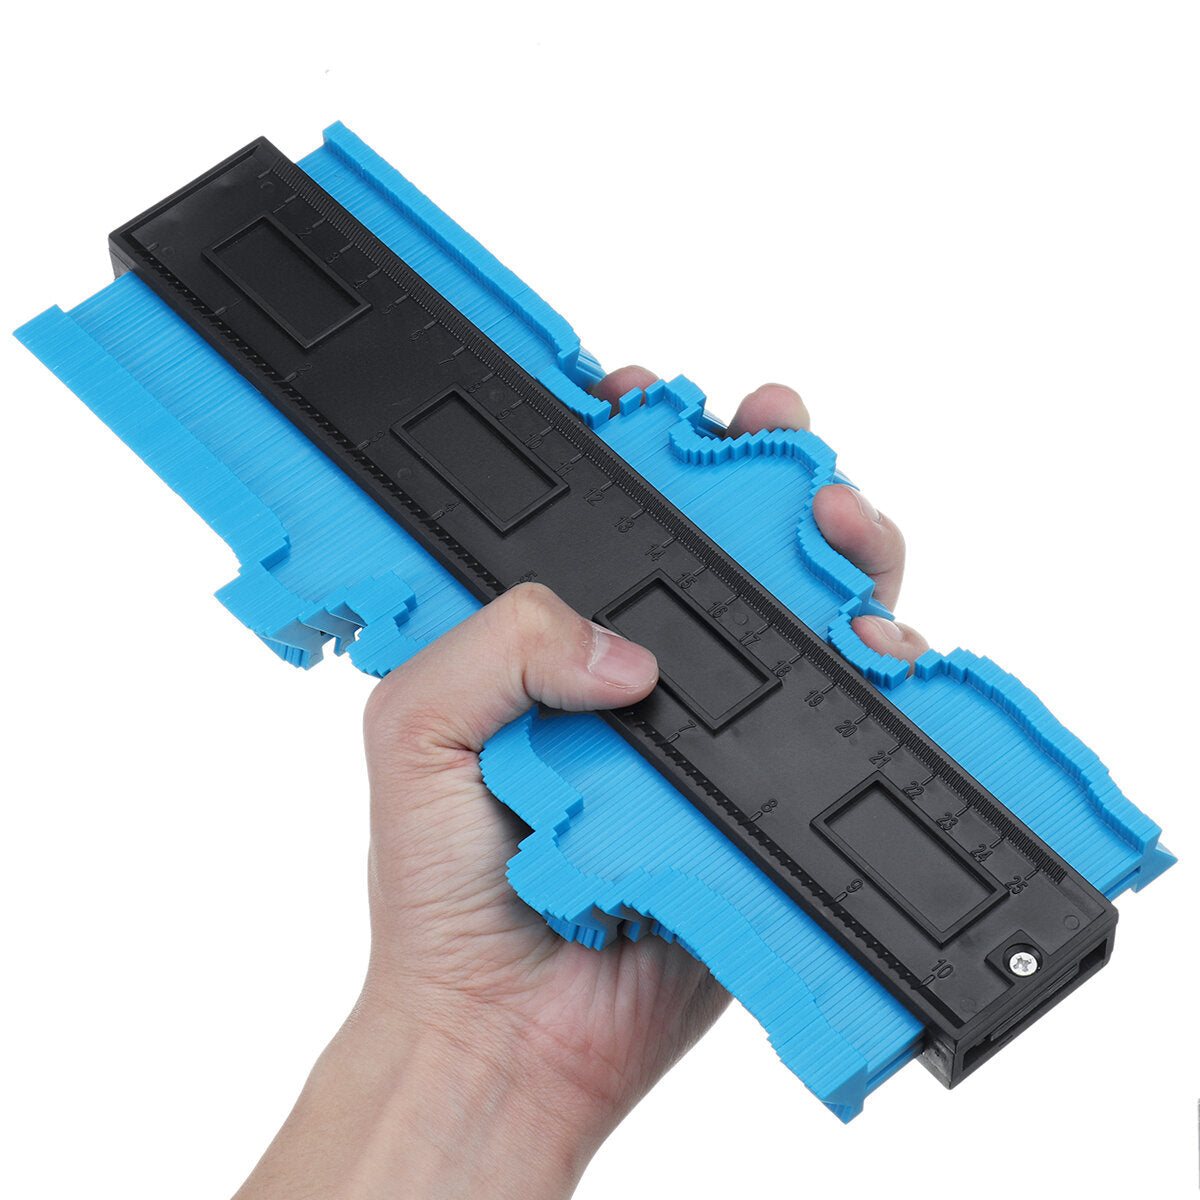 10 Inch ABS Material Irregular Contour Gauge Multi-function Gauge